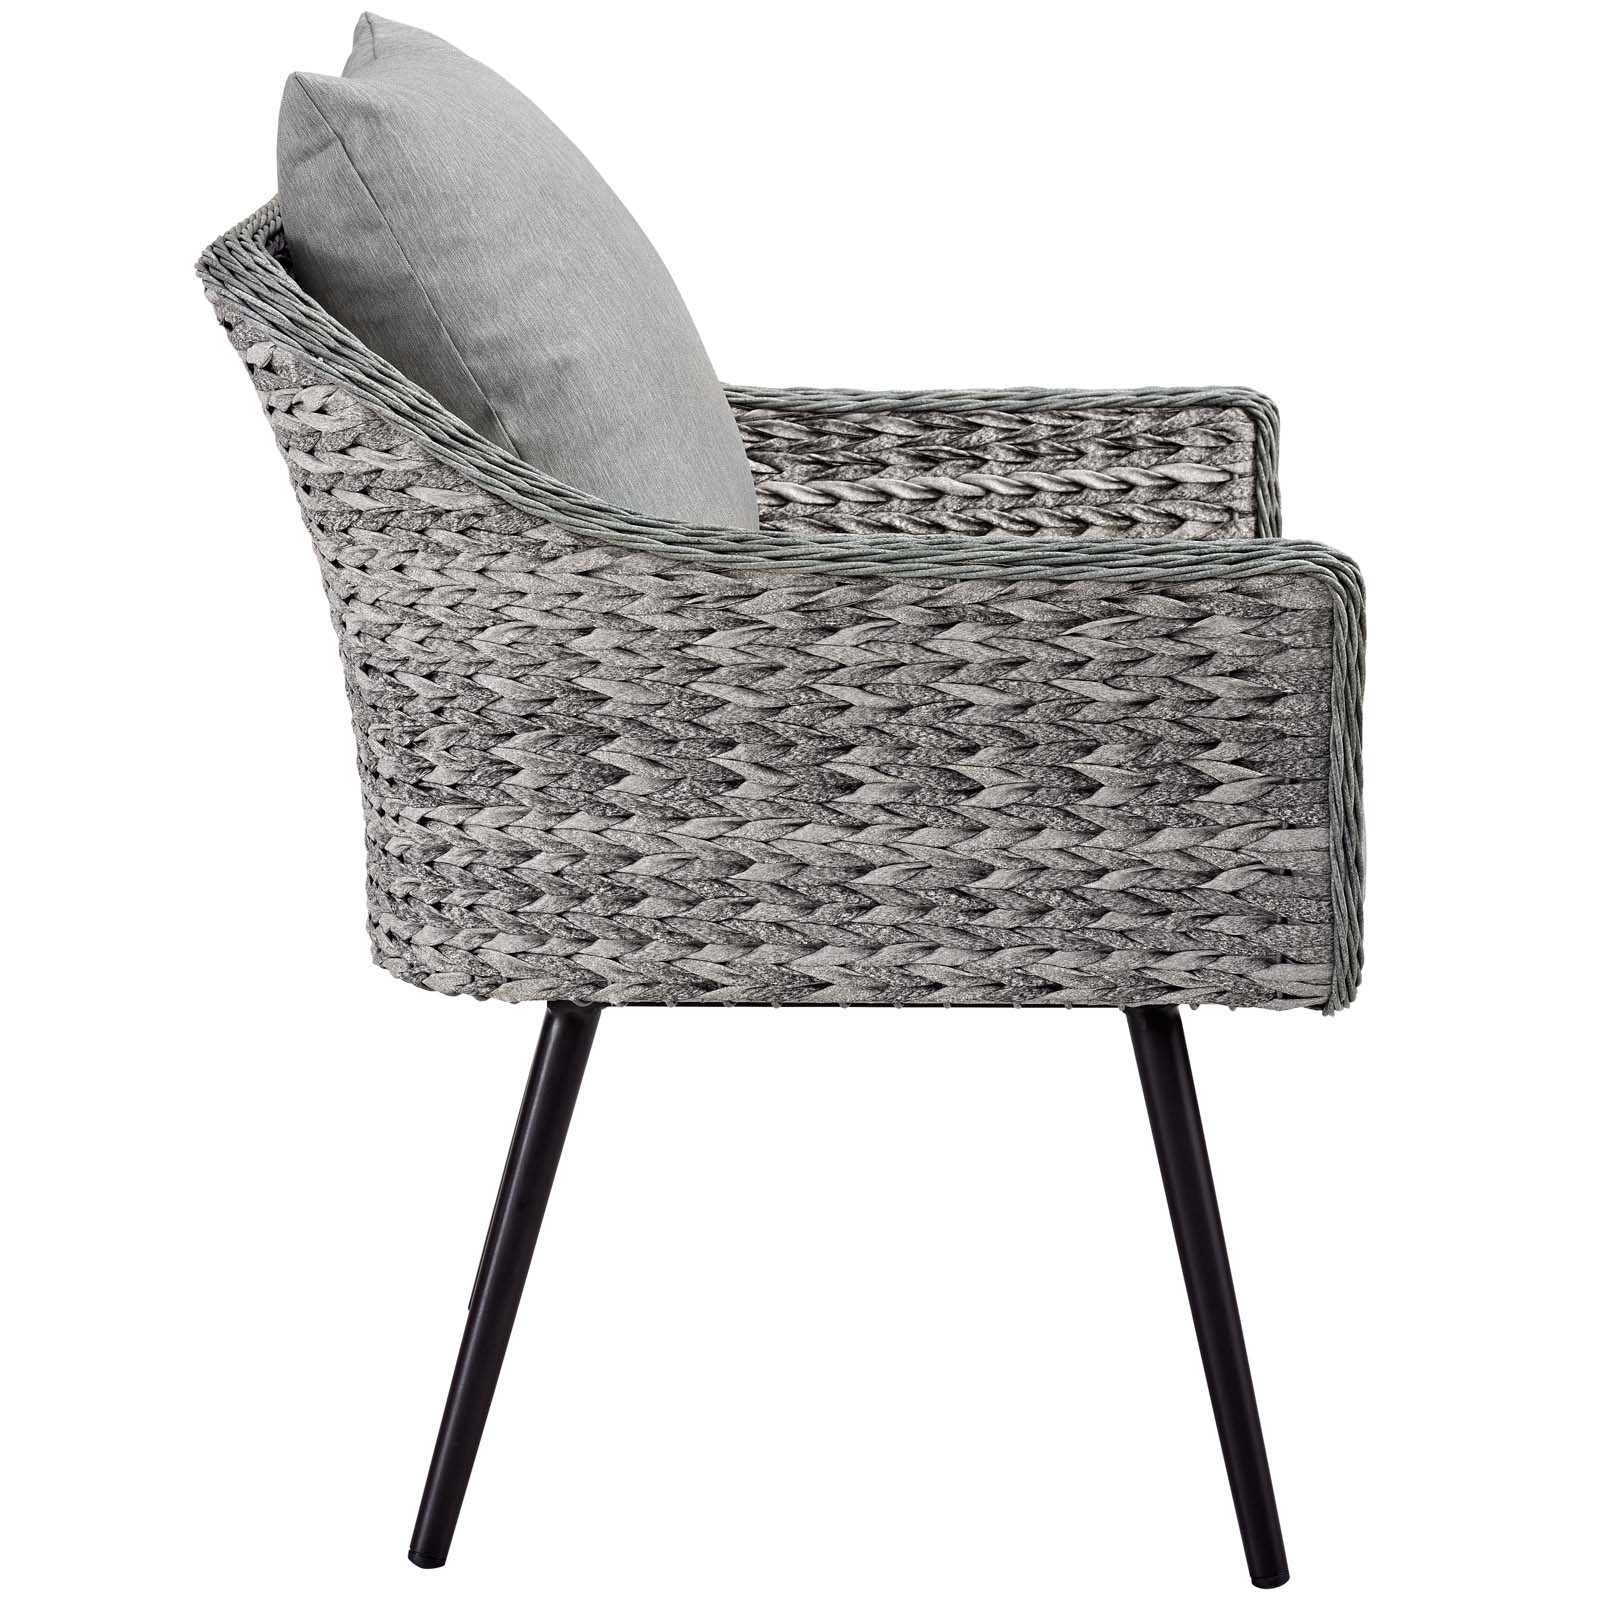 Modern Contemporary Urban Design Outdoor Patio Balcony Garden Furniture Lounge Chair Armchair, Rattan Wicker Aluminum Metal, Grey Gray - image 3 of 5